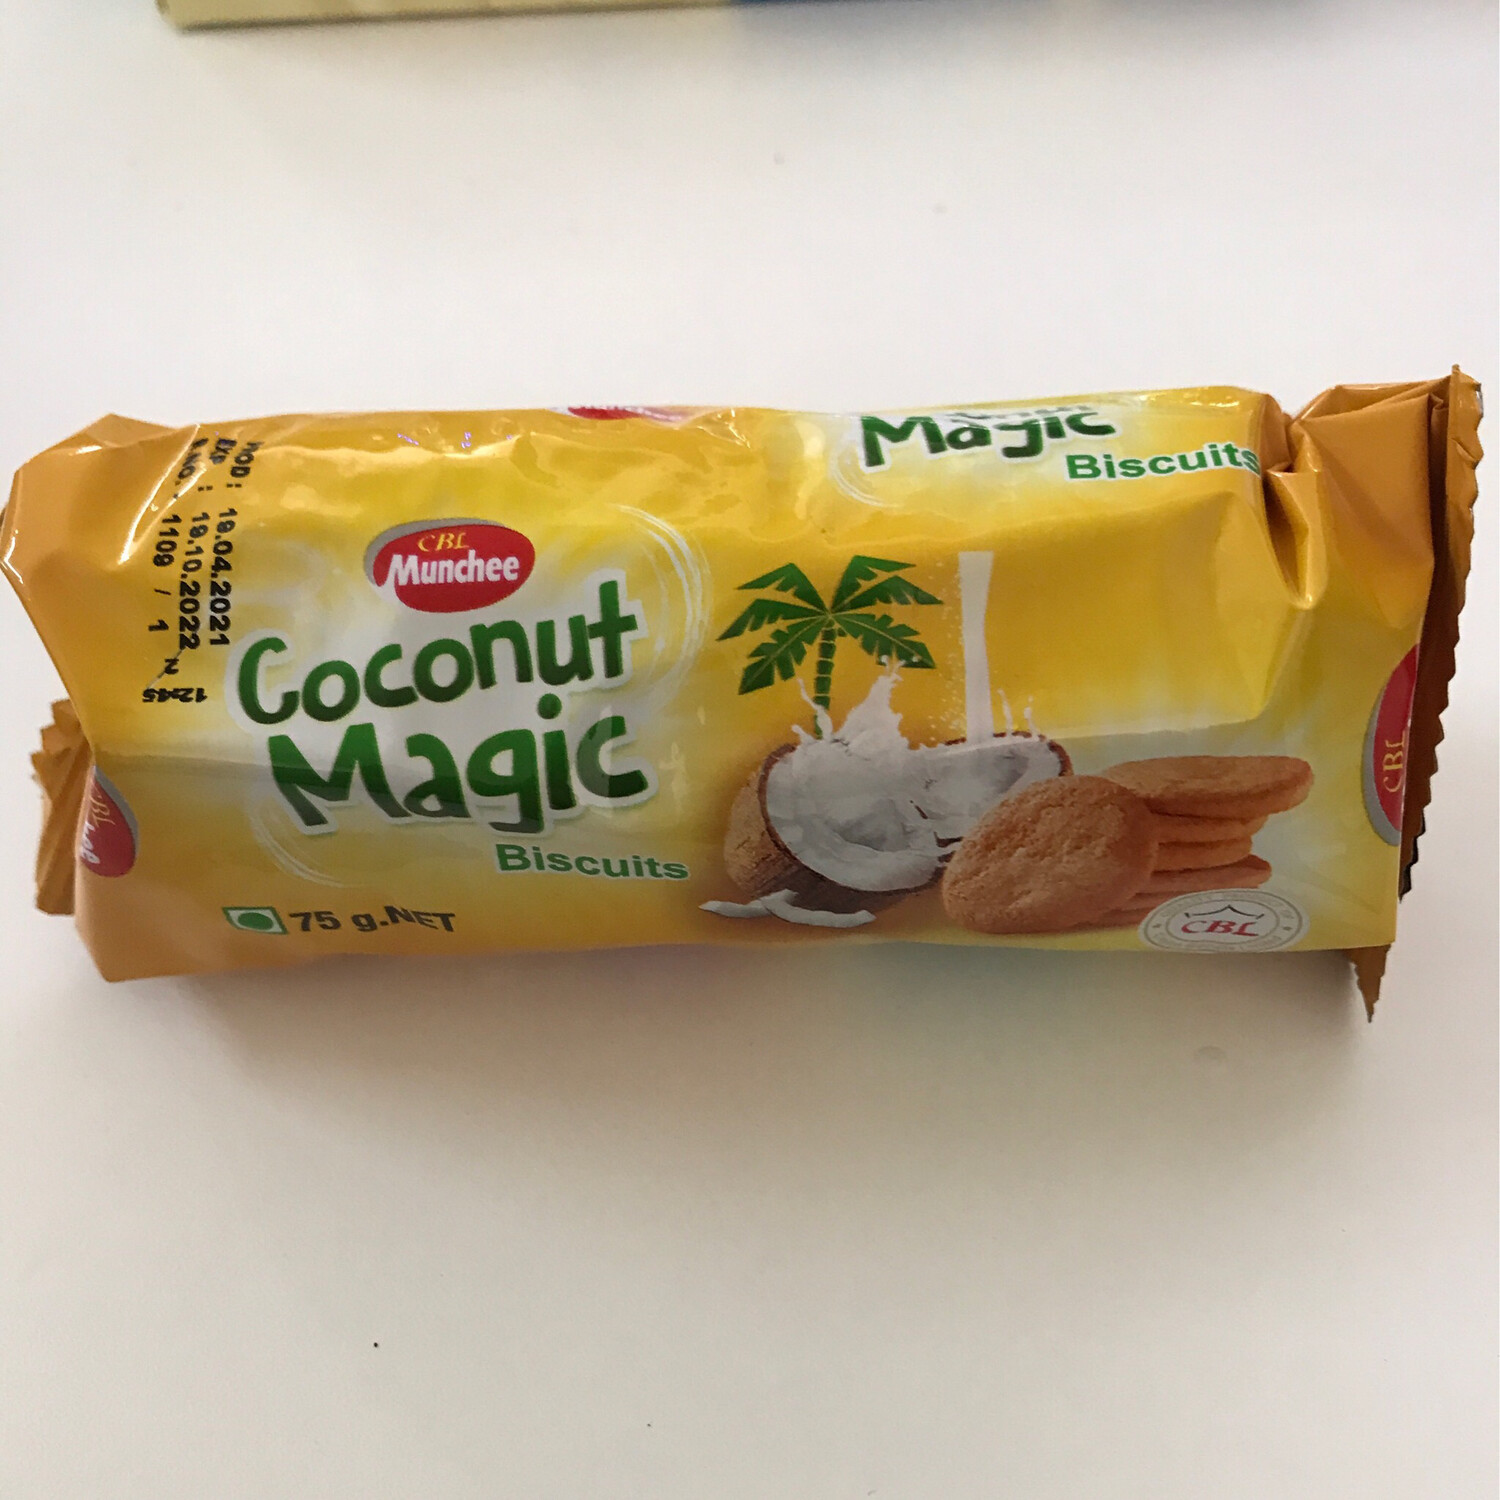 CBL Mundchee Coconut Magic Biscuits (Kekse) 75g